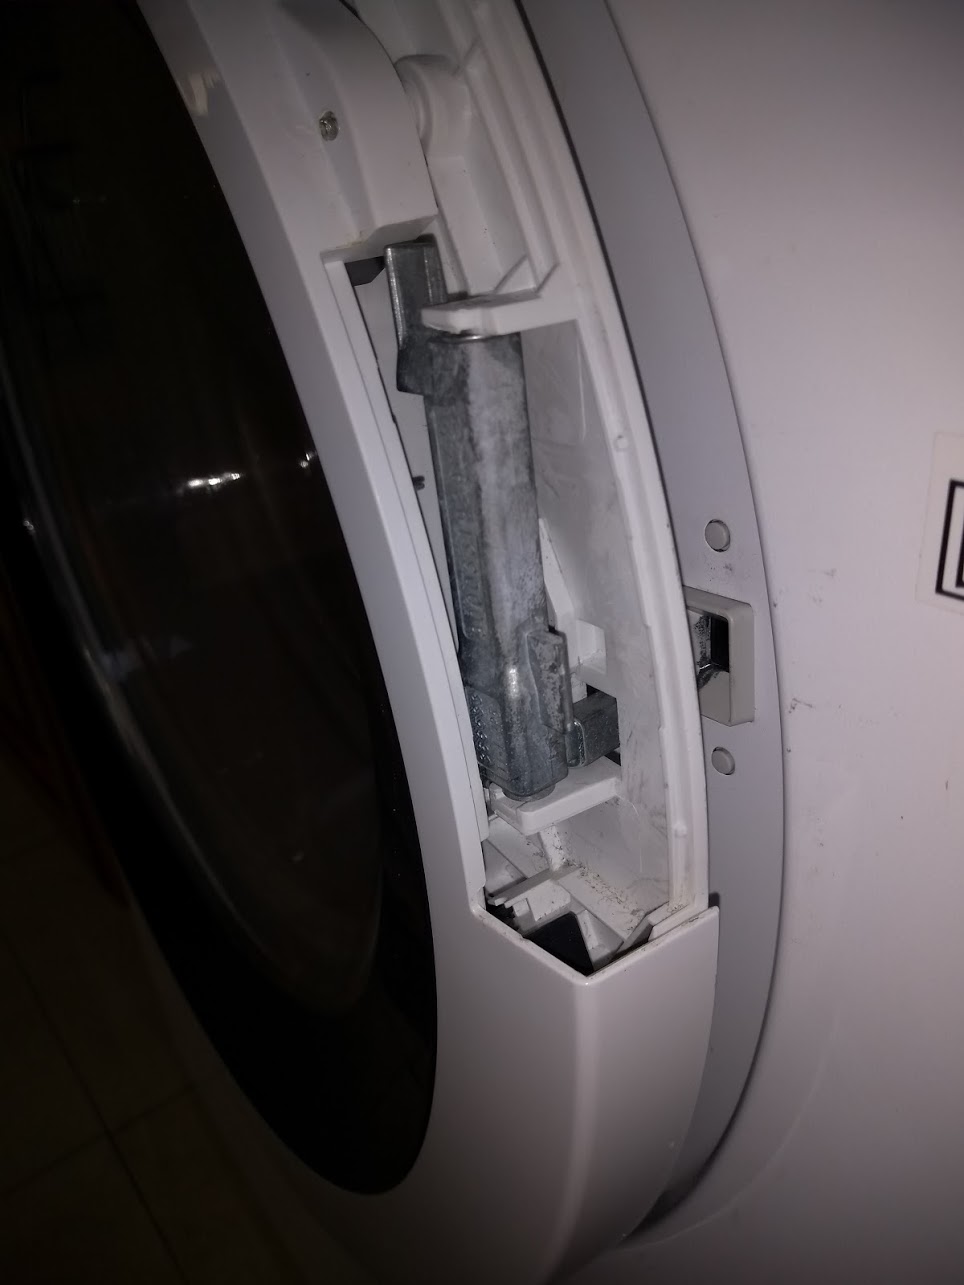 Bosch Washer Dryer door handle problem | DIYnot Forums